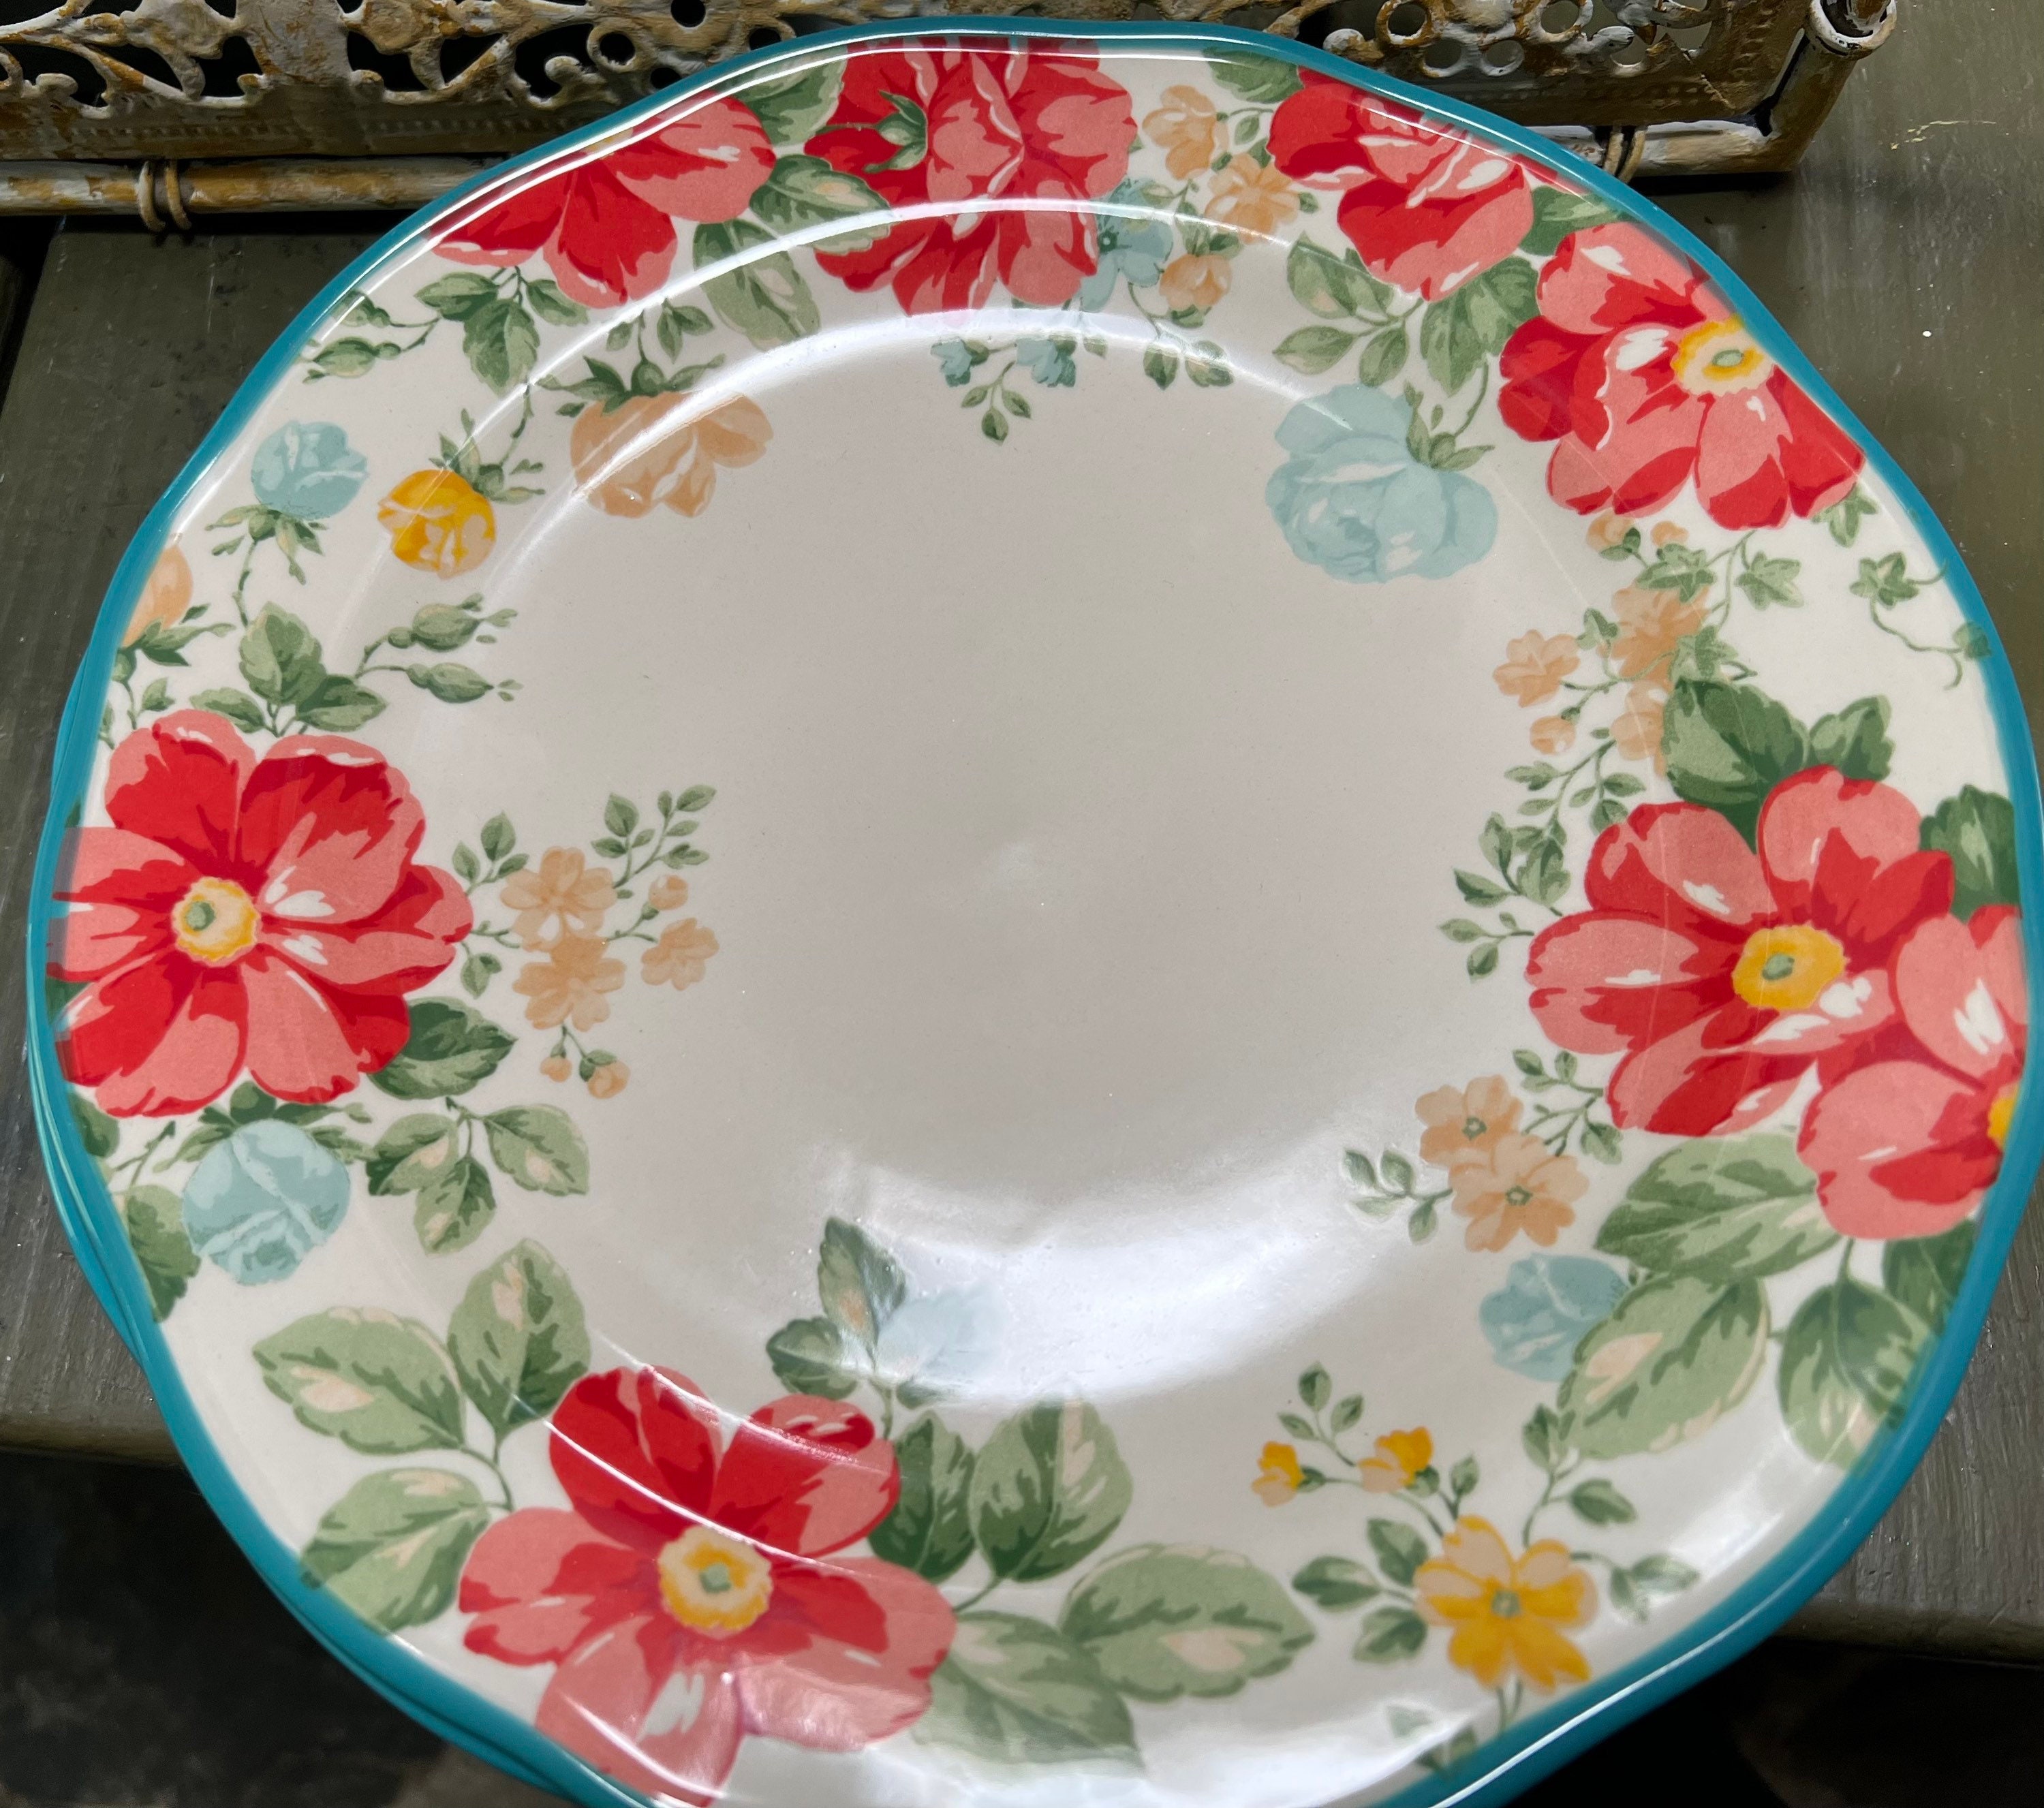 The Pioneer Woman Fancy Flourish Round Ceramic Casserole Dish with Lid